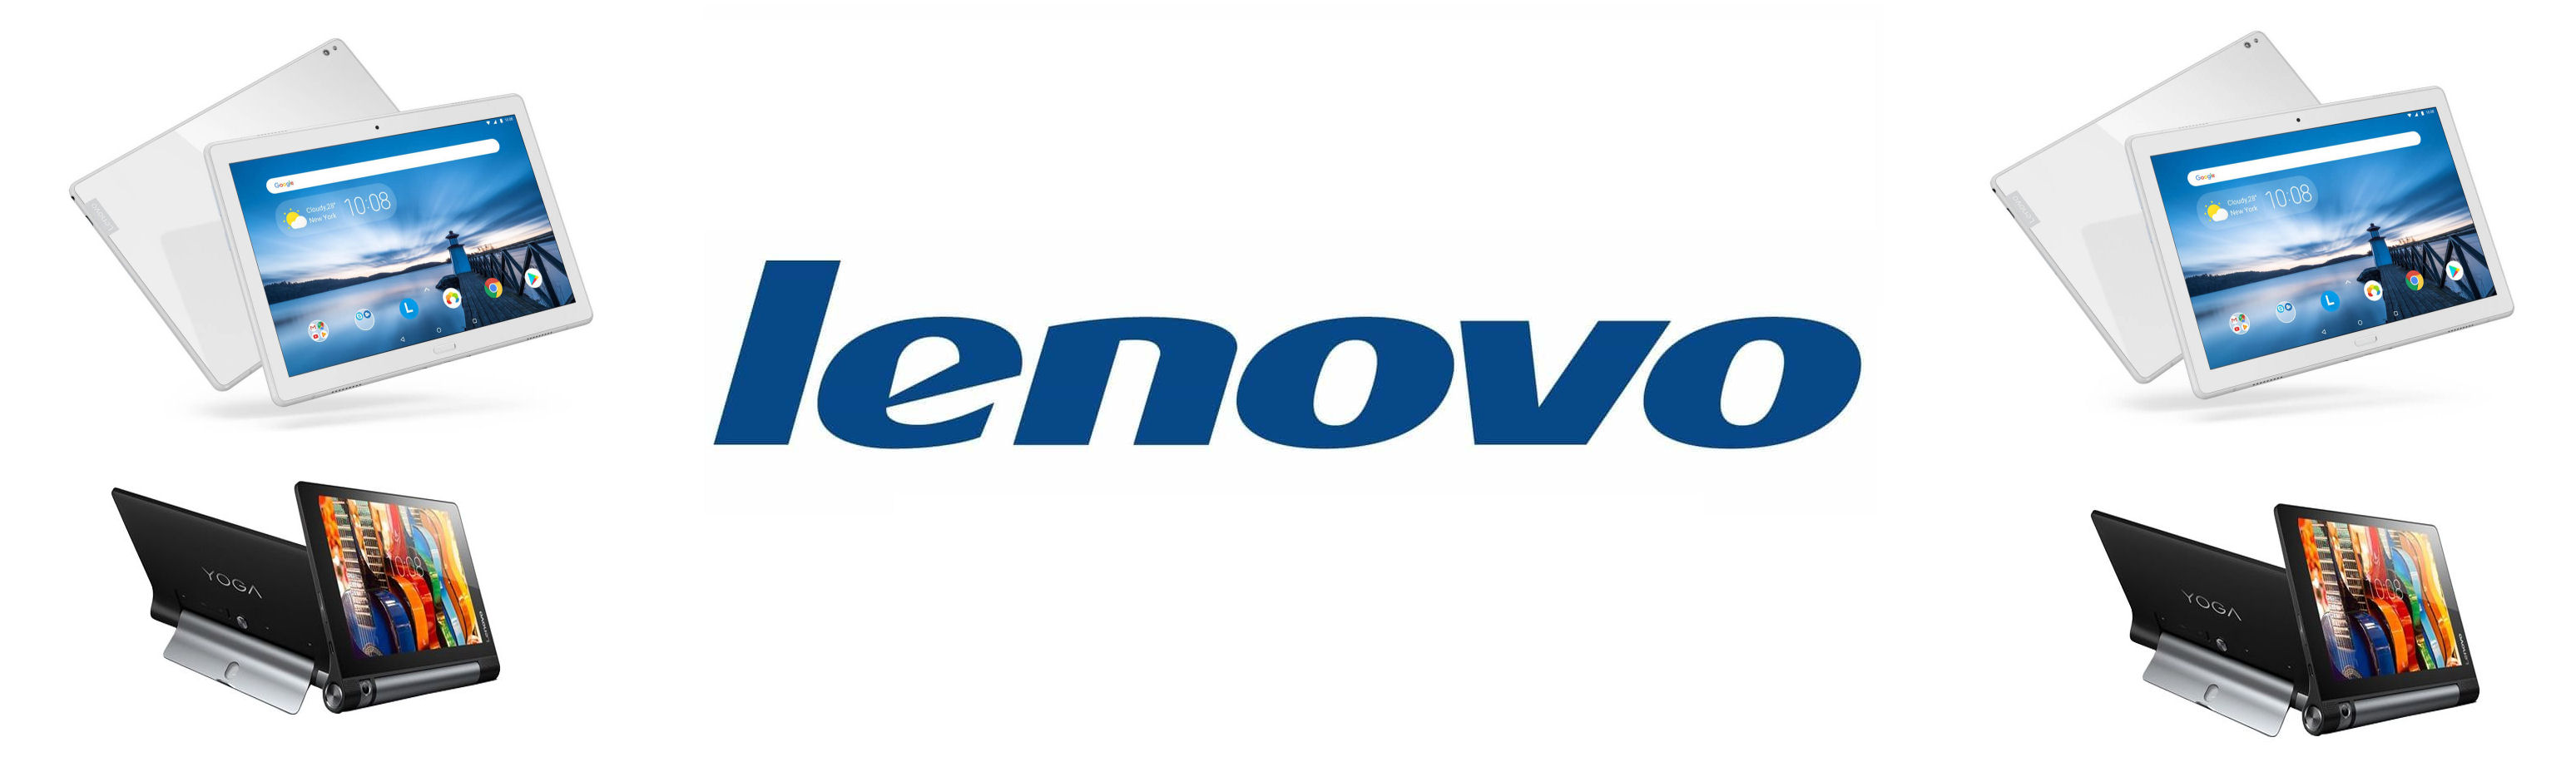 Tablet Repair Service For Lenovo